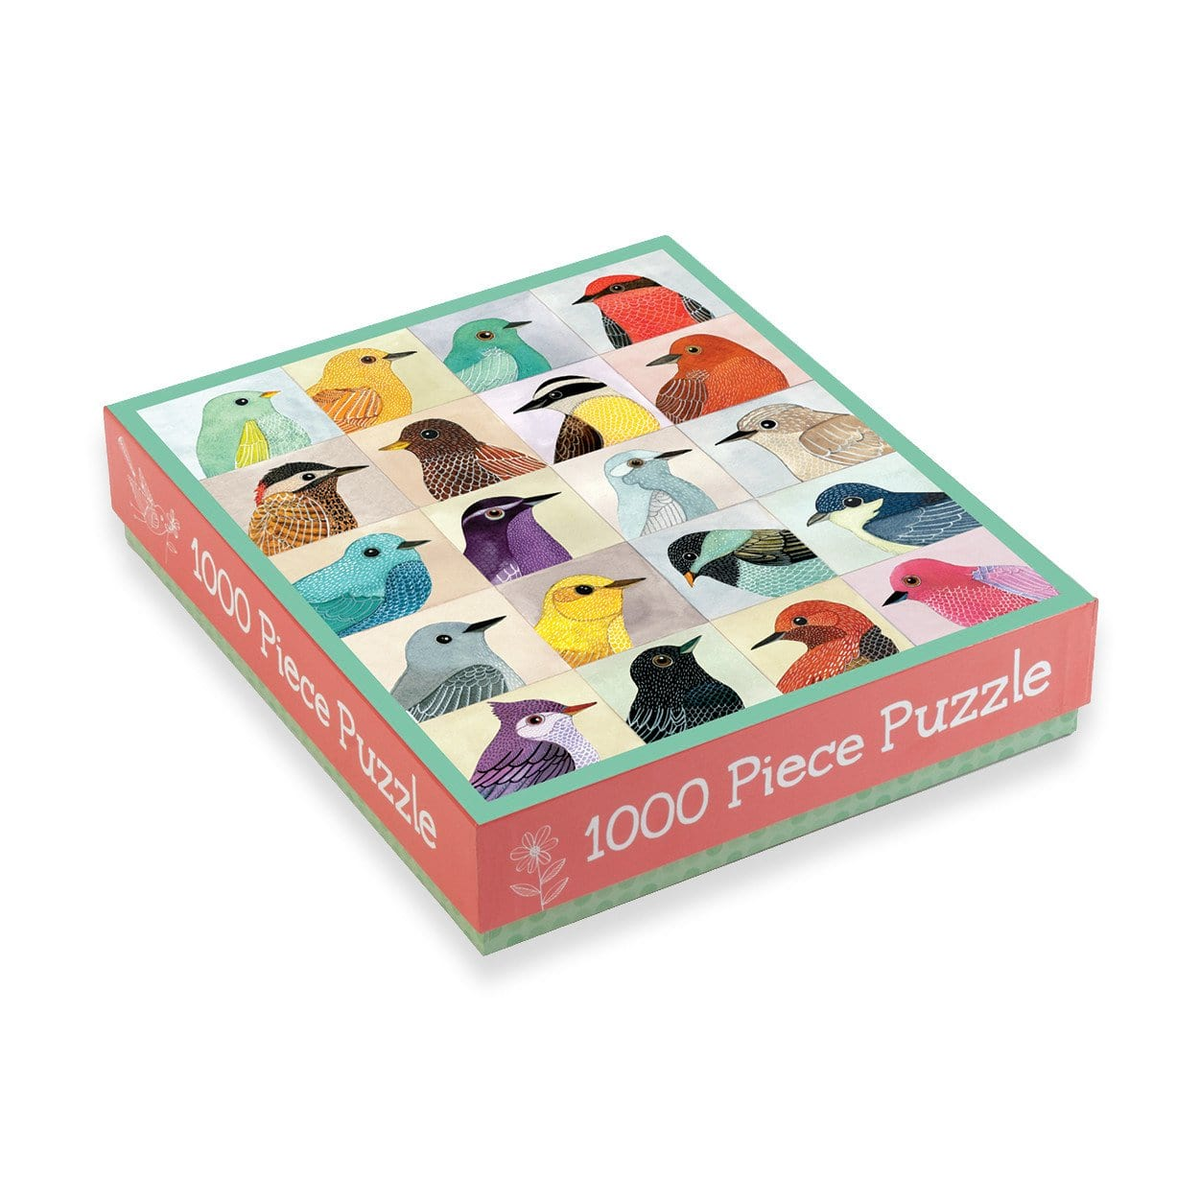 Avian Friends 1000 Piece Puzzle - Quick Ship - Puzzlicious.com